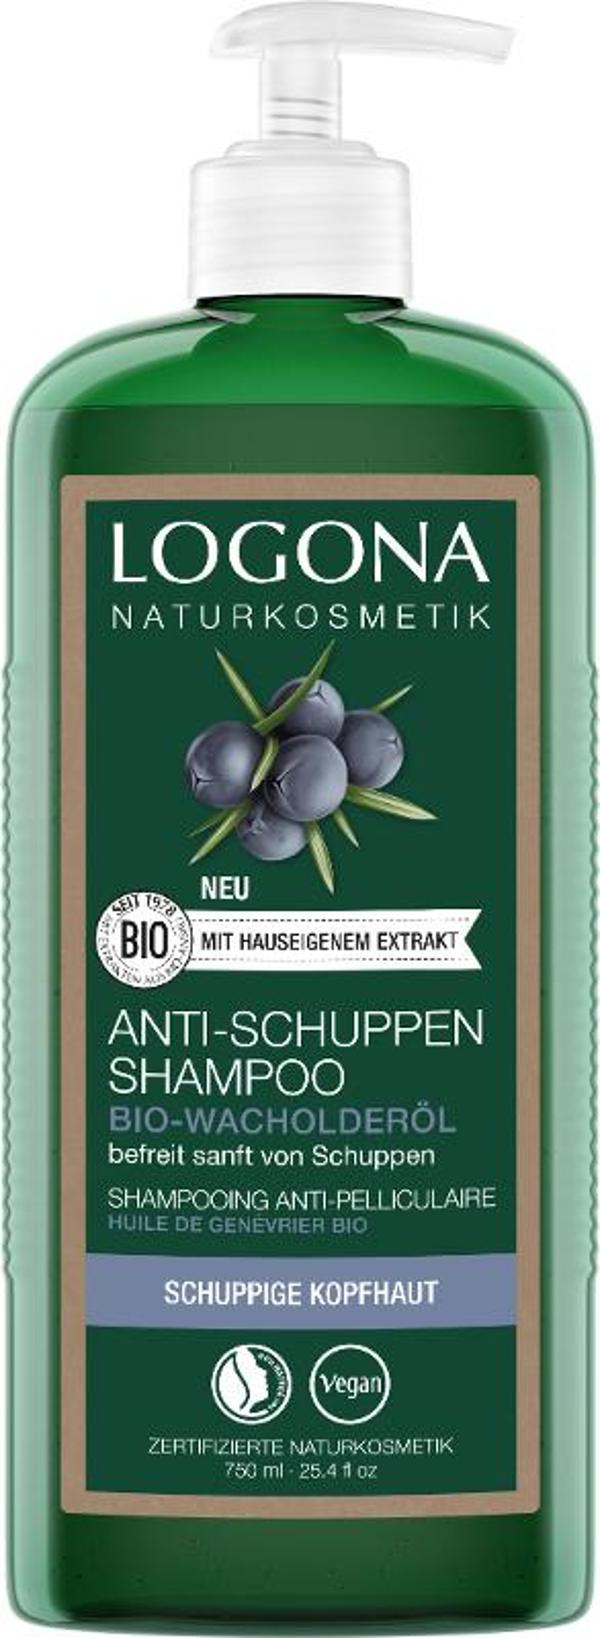 Produktfoto zu Anti-Schuppen Shampoo Wacholderöl 750ml